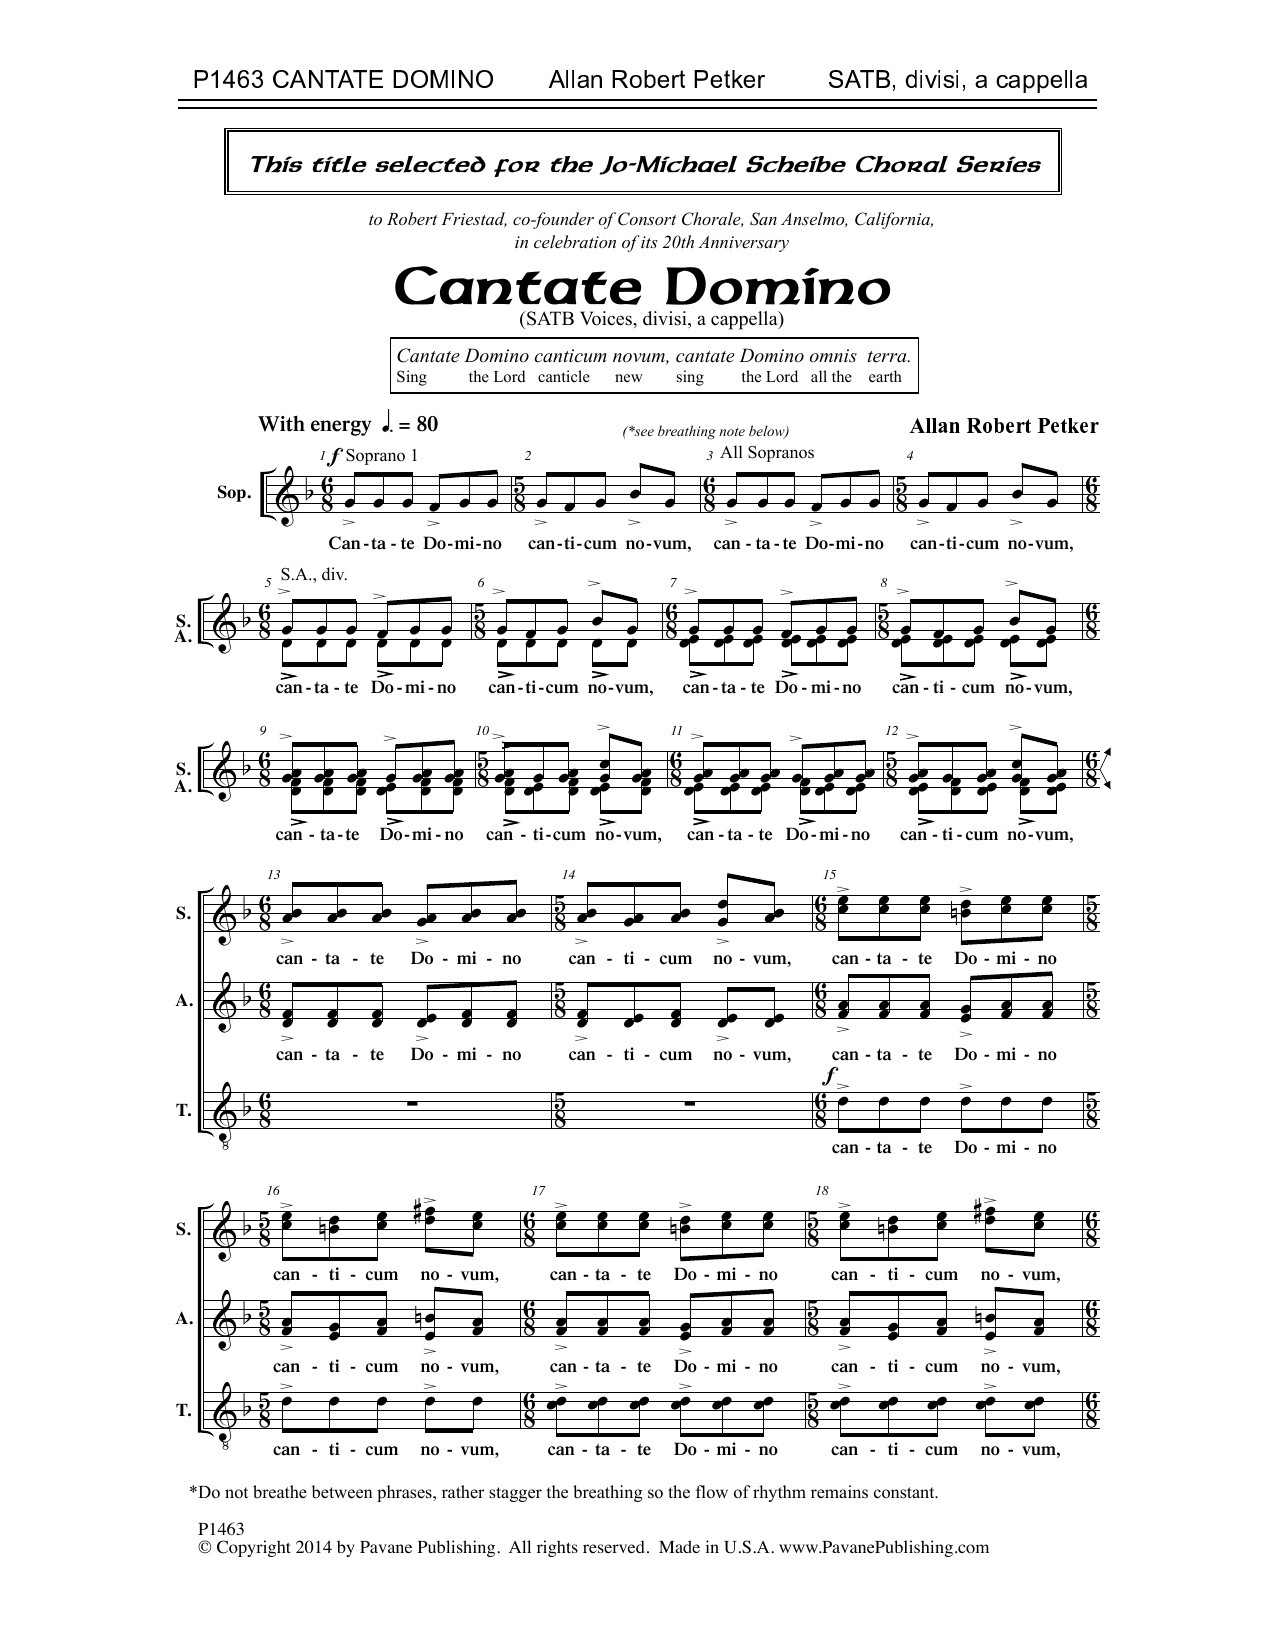 Download Allan Robert Petker Cantate Domino Sheet Music